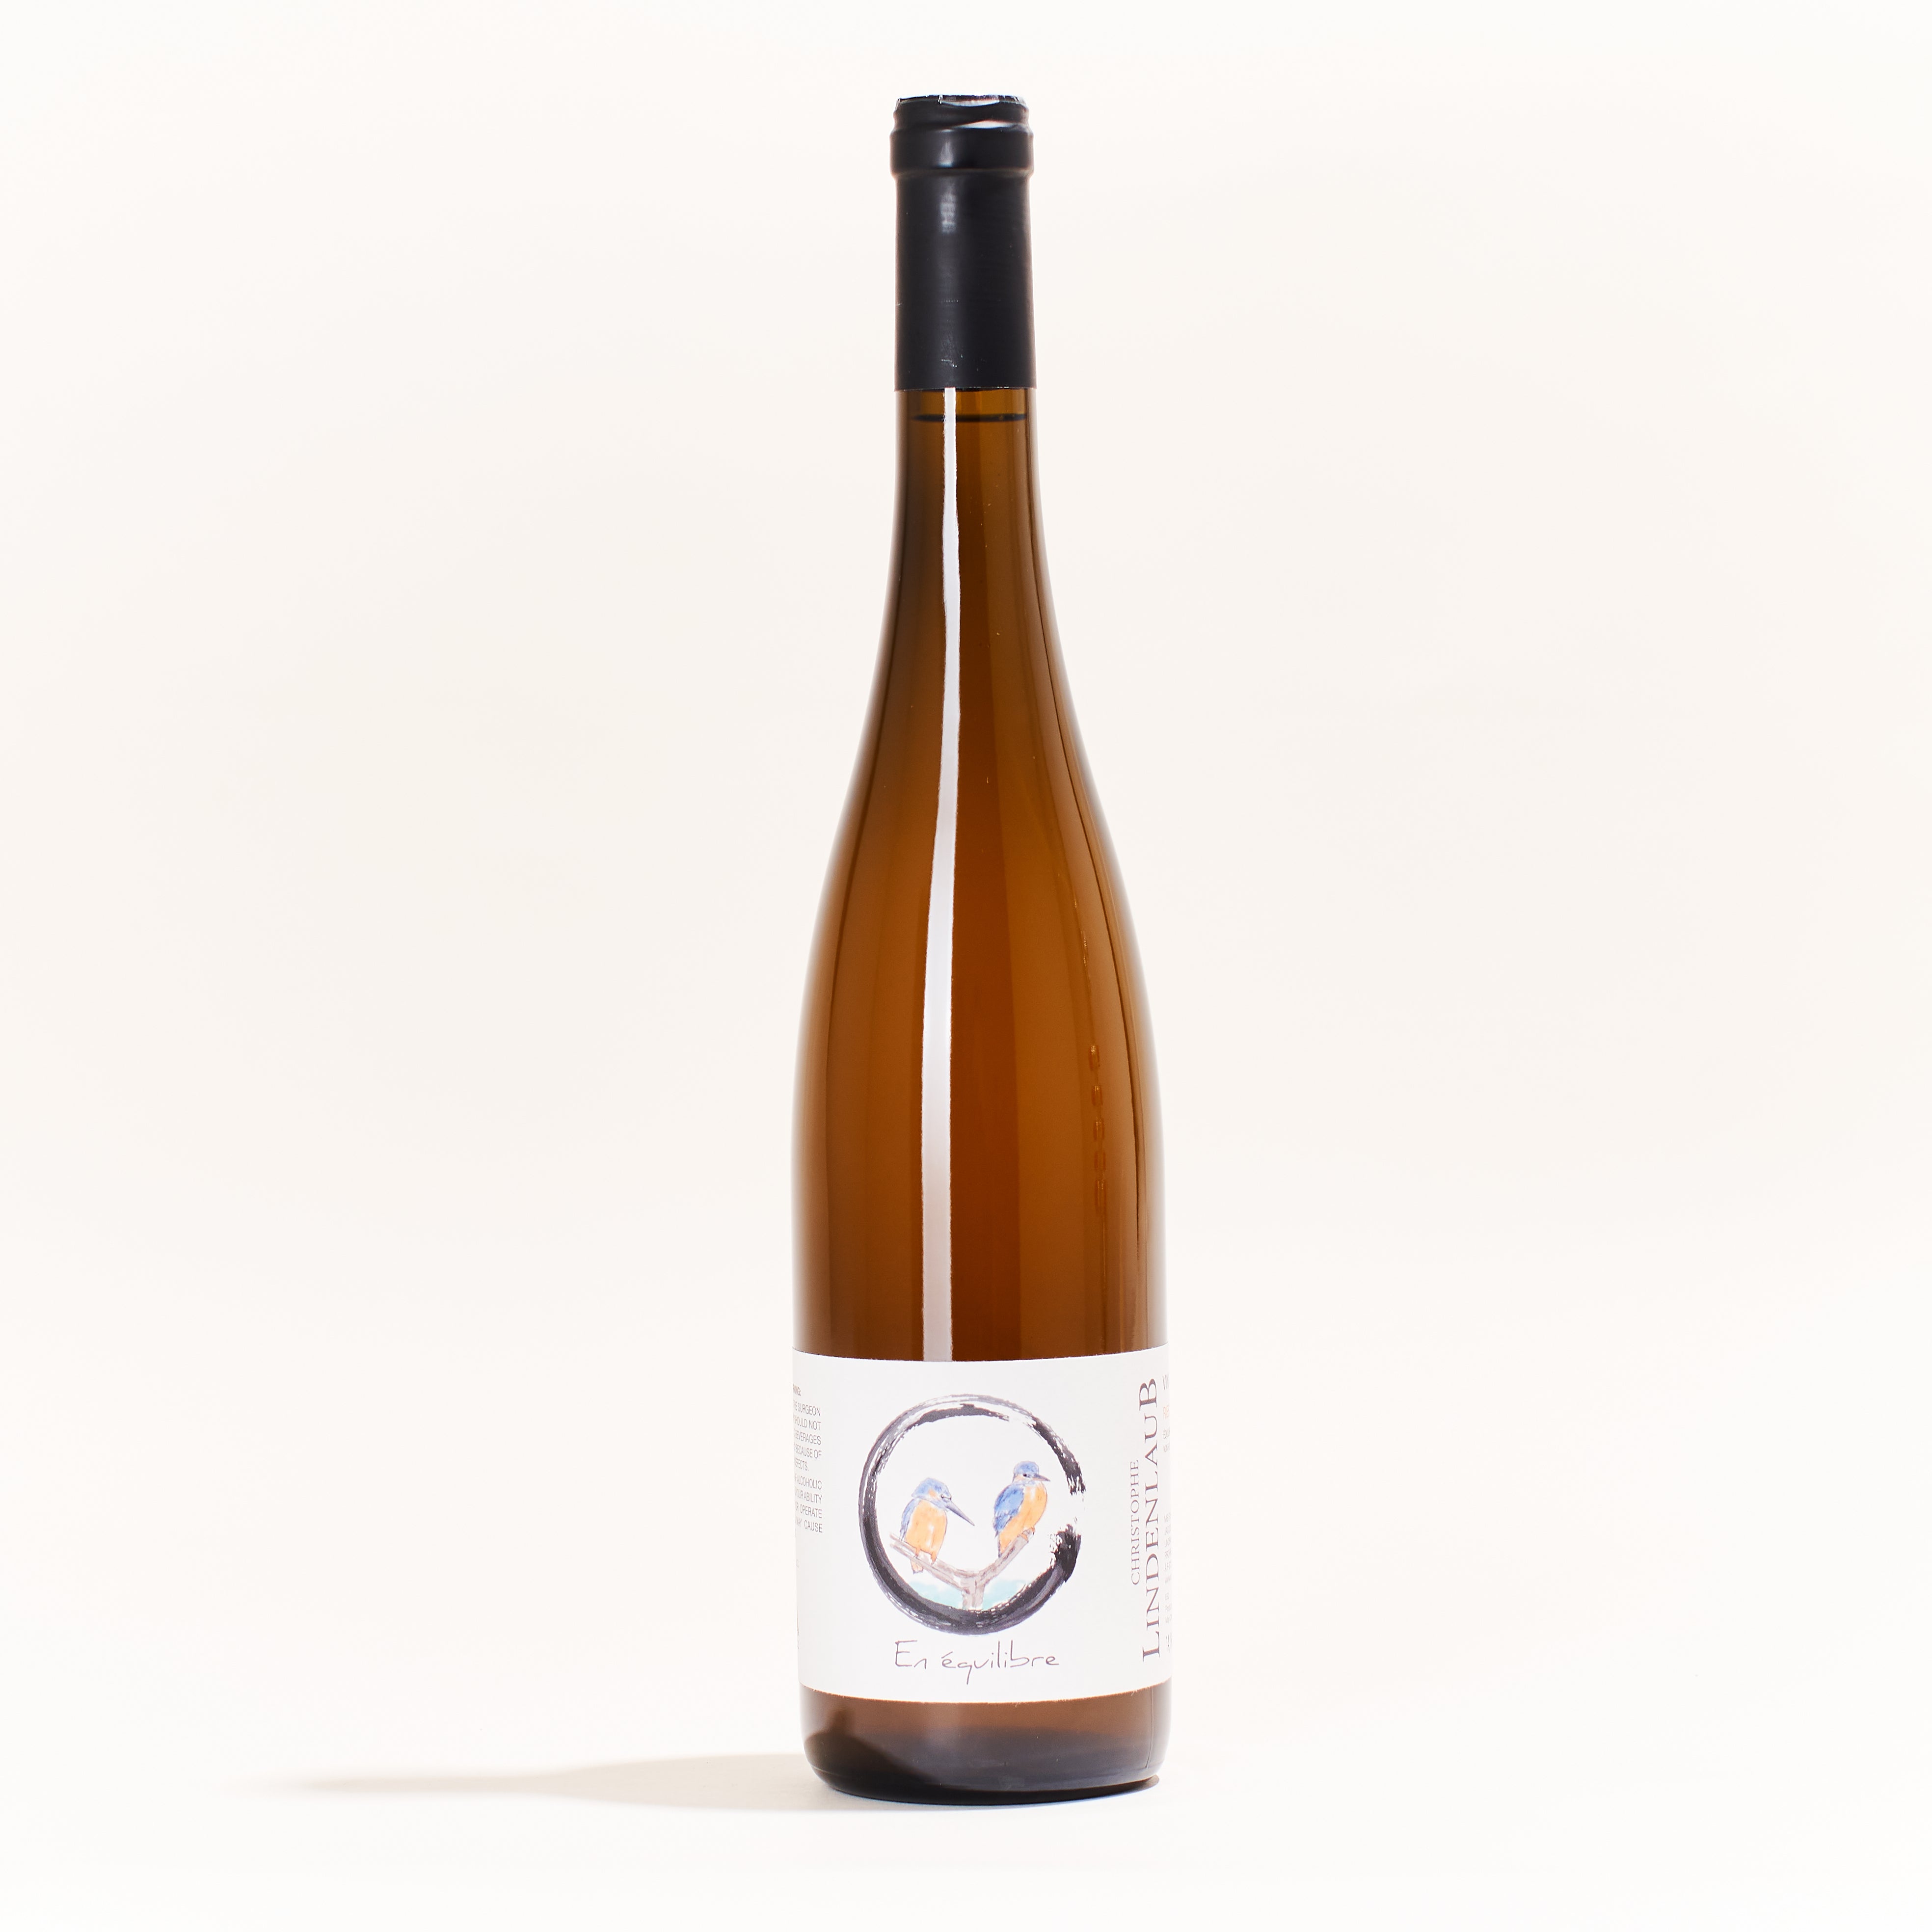 Lindenlaub En Équilibre Riesling natural white wine Alsace France